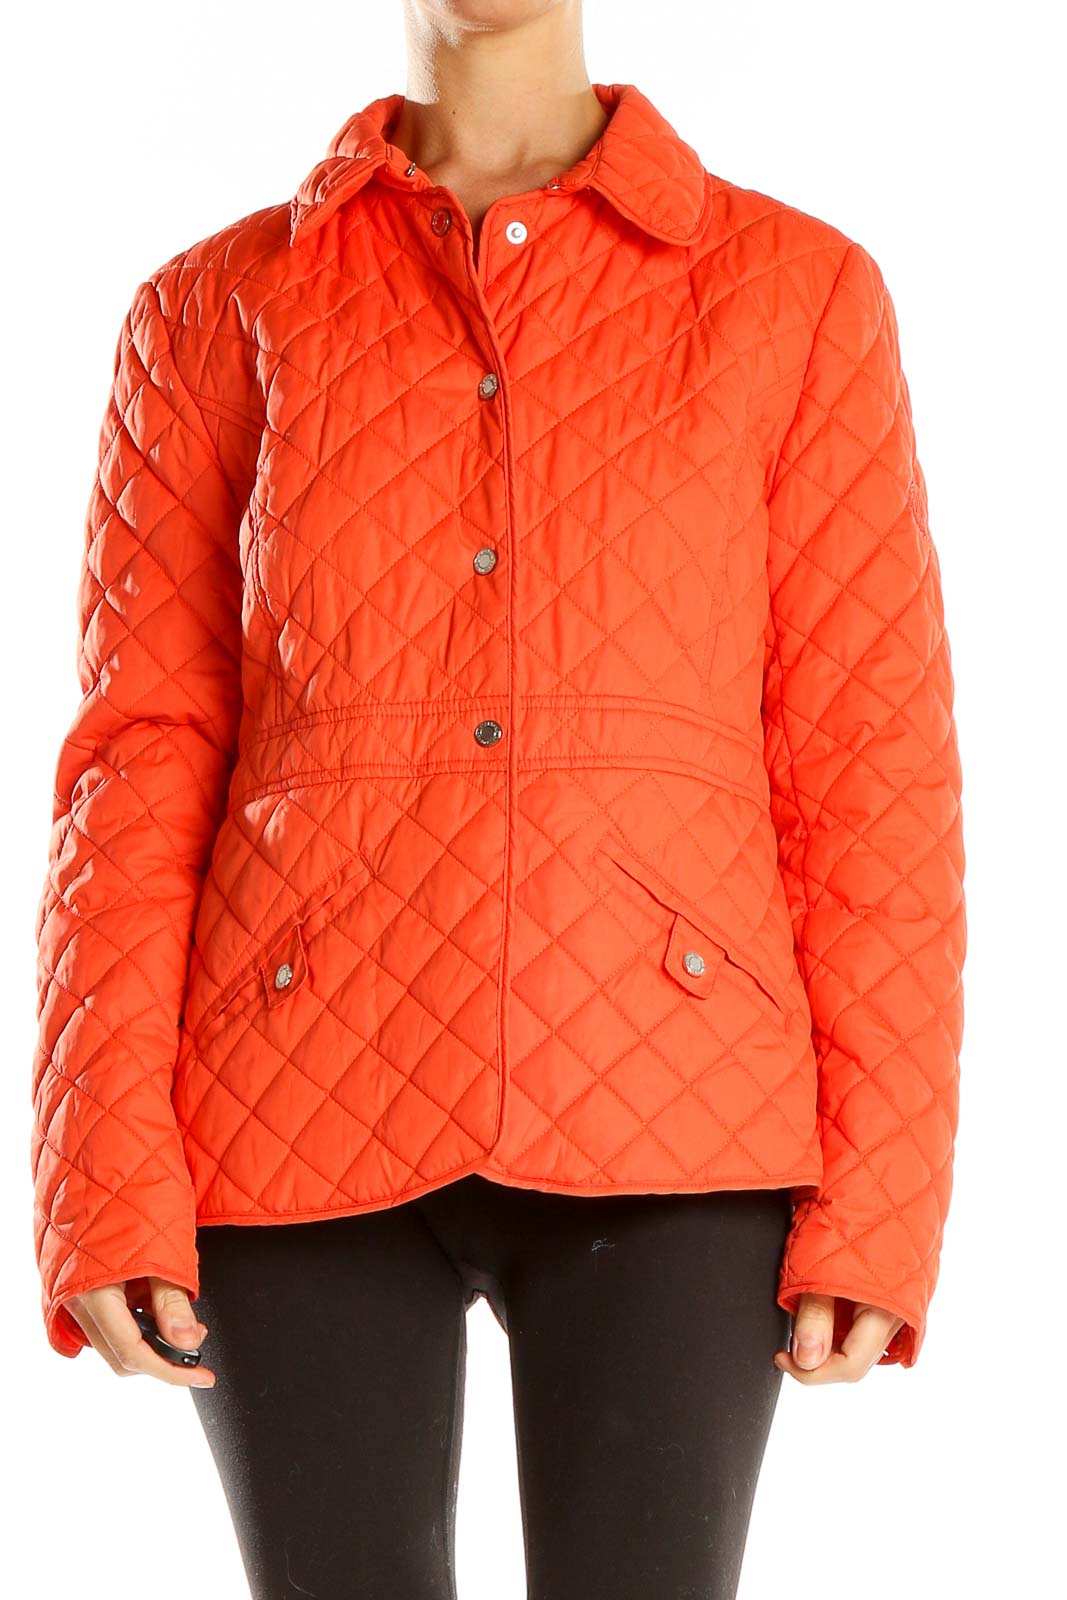 Orange Quilted Jacket Front